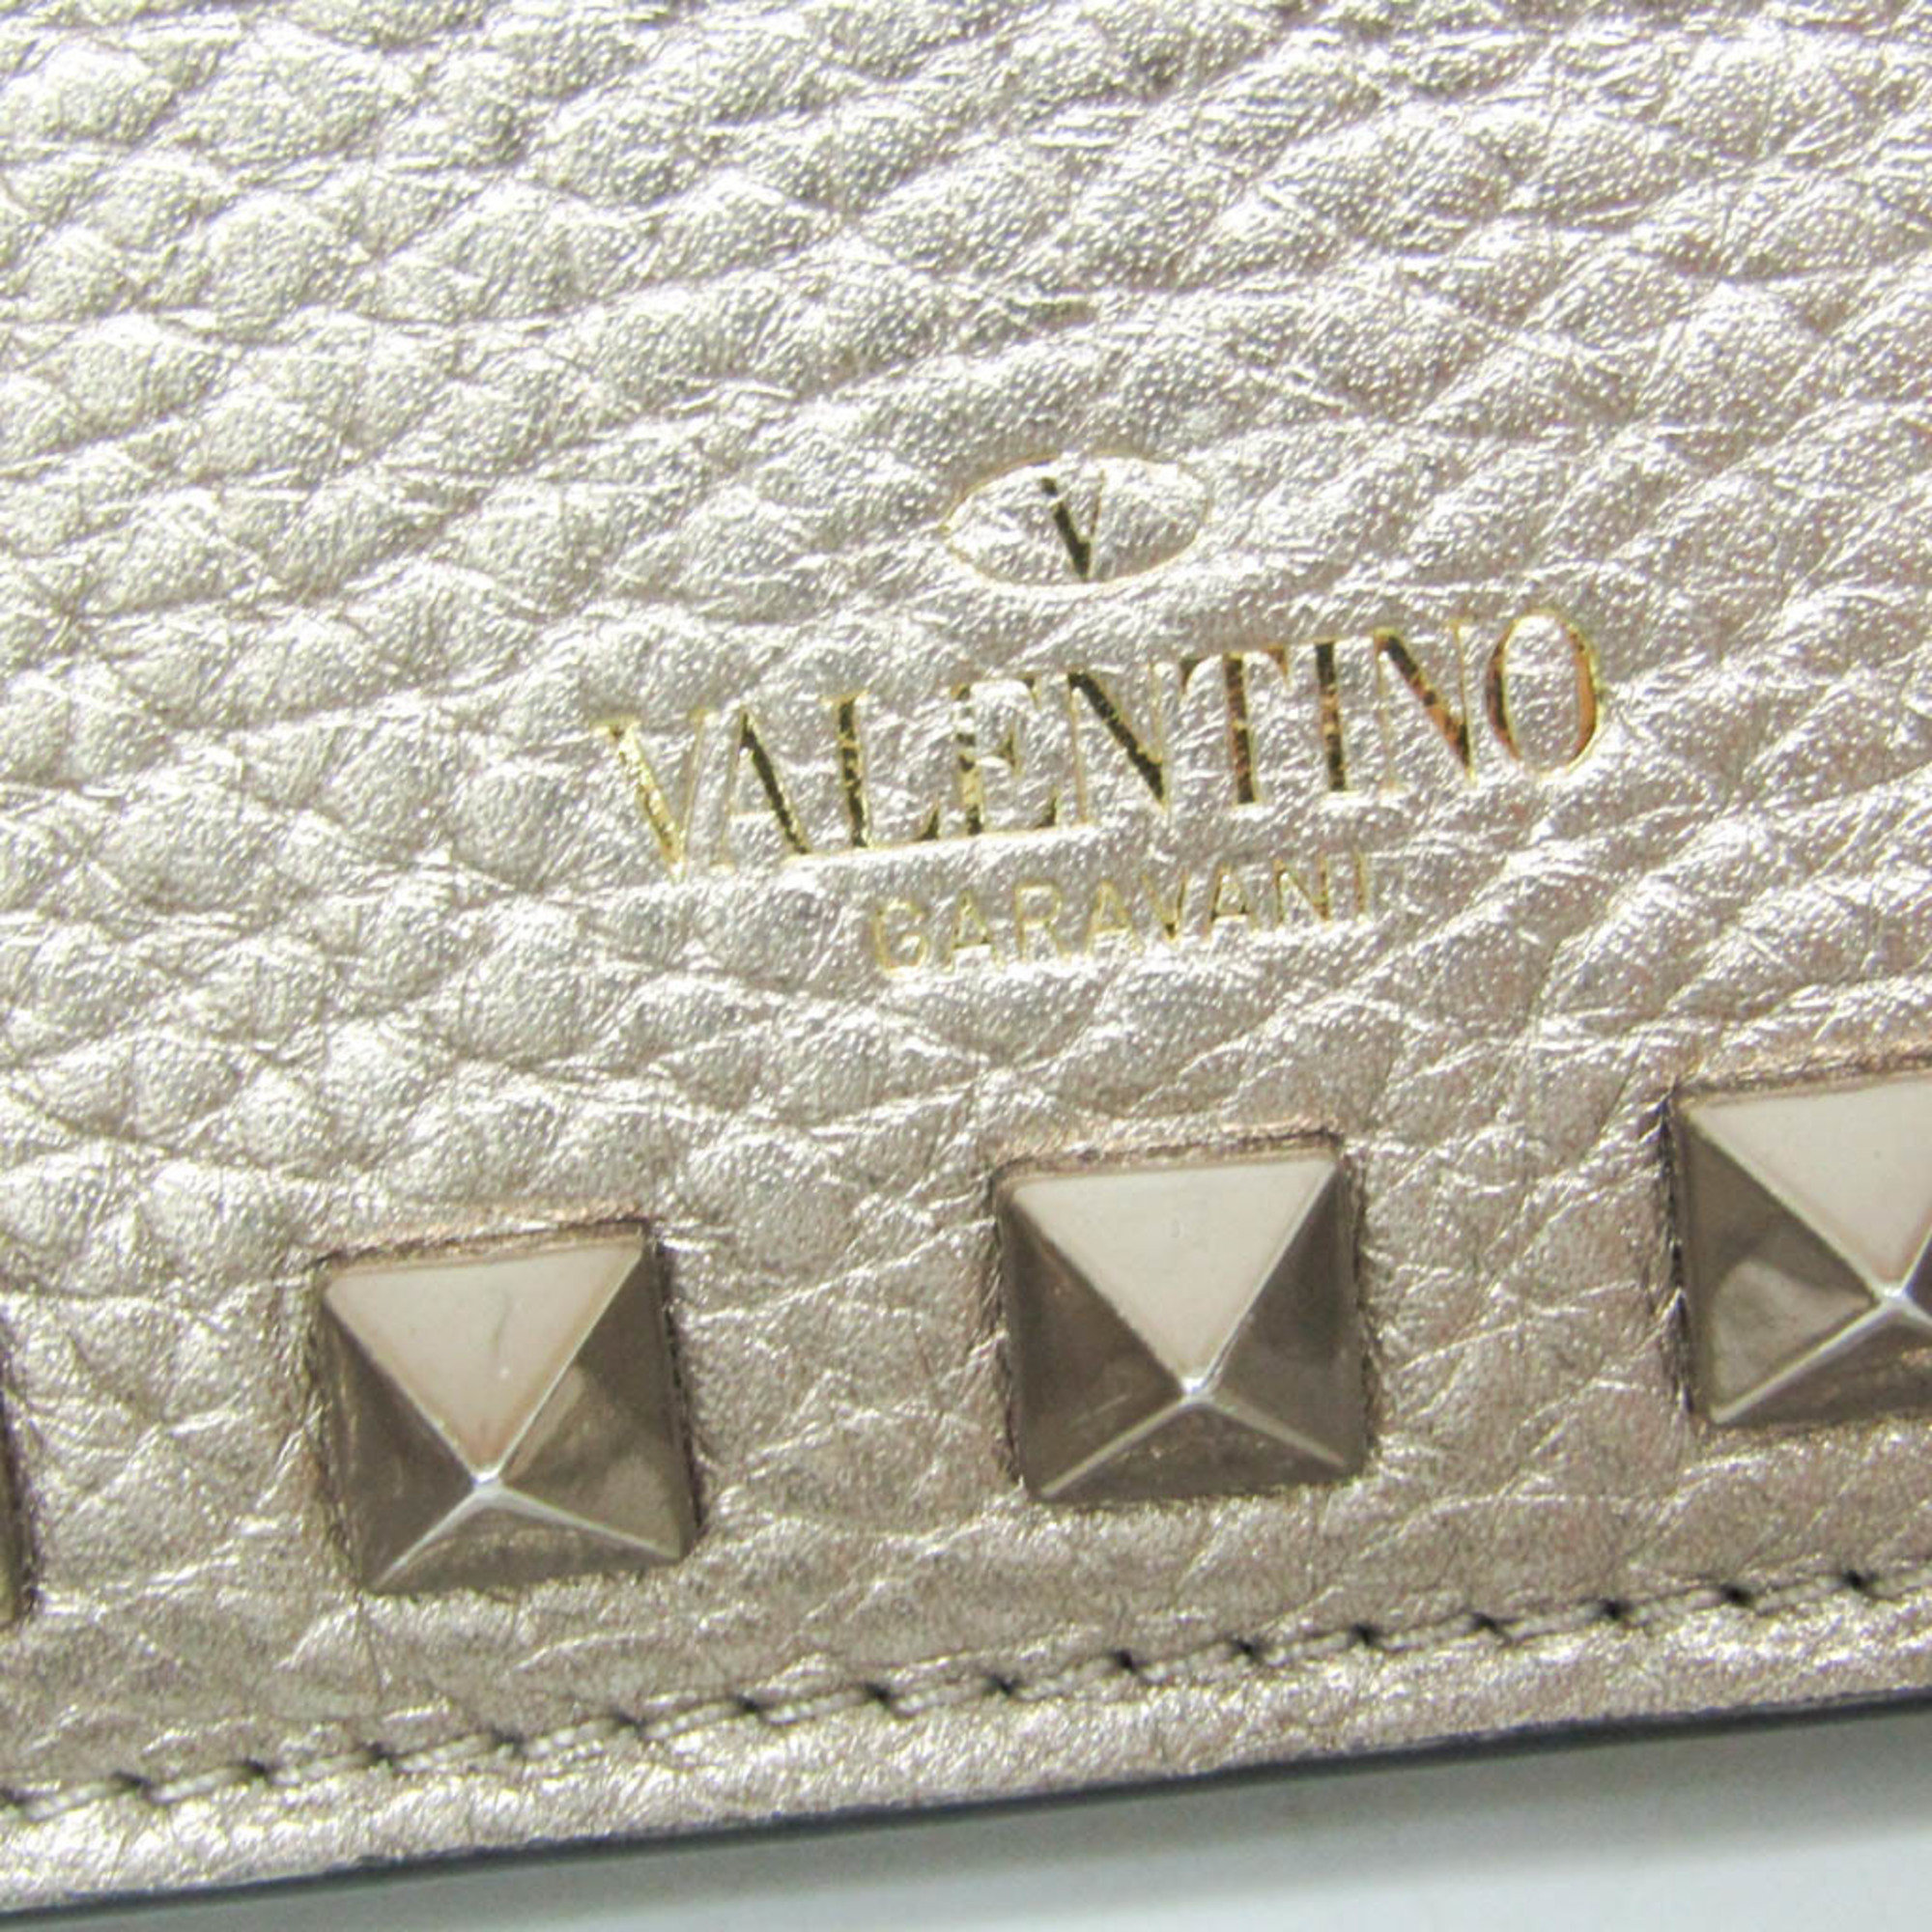 Valentino Garavani Rockstud Mini Women's Leather Clutch Bag,Shoulder Bag Bronze